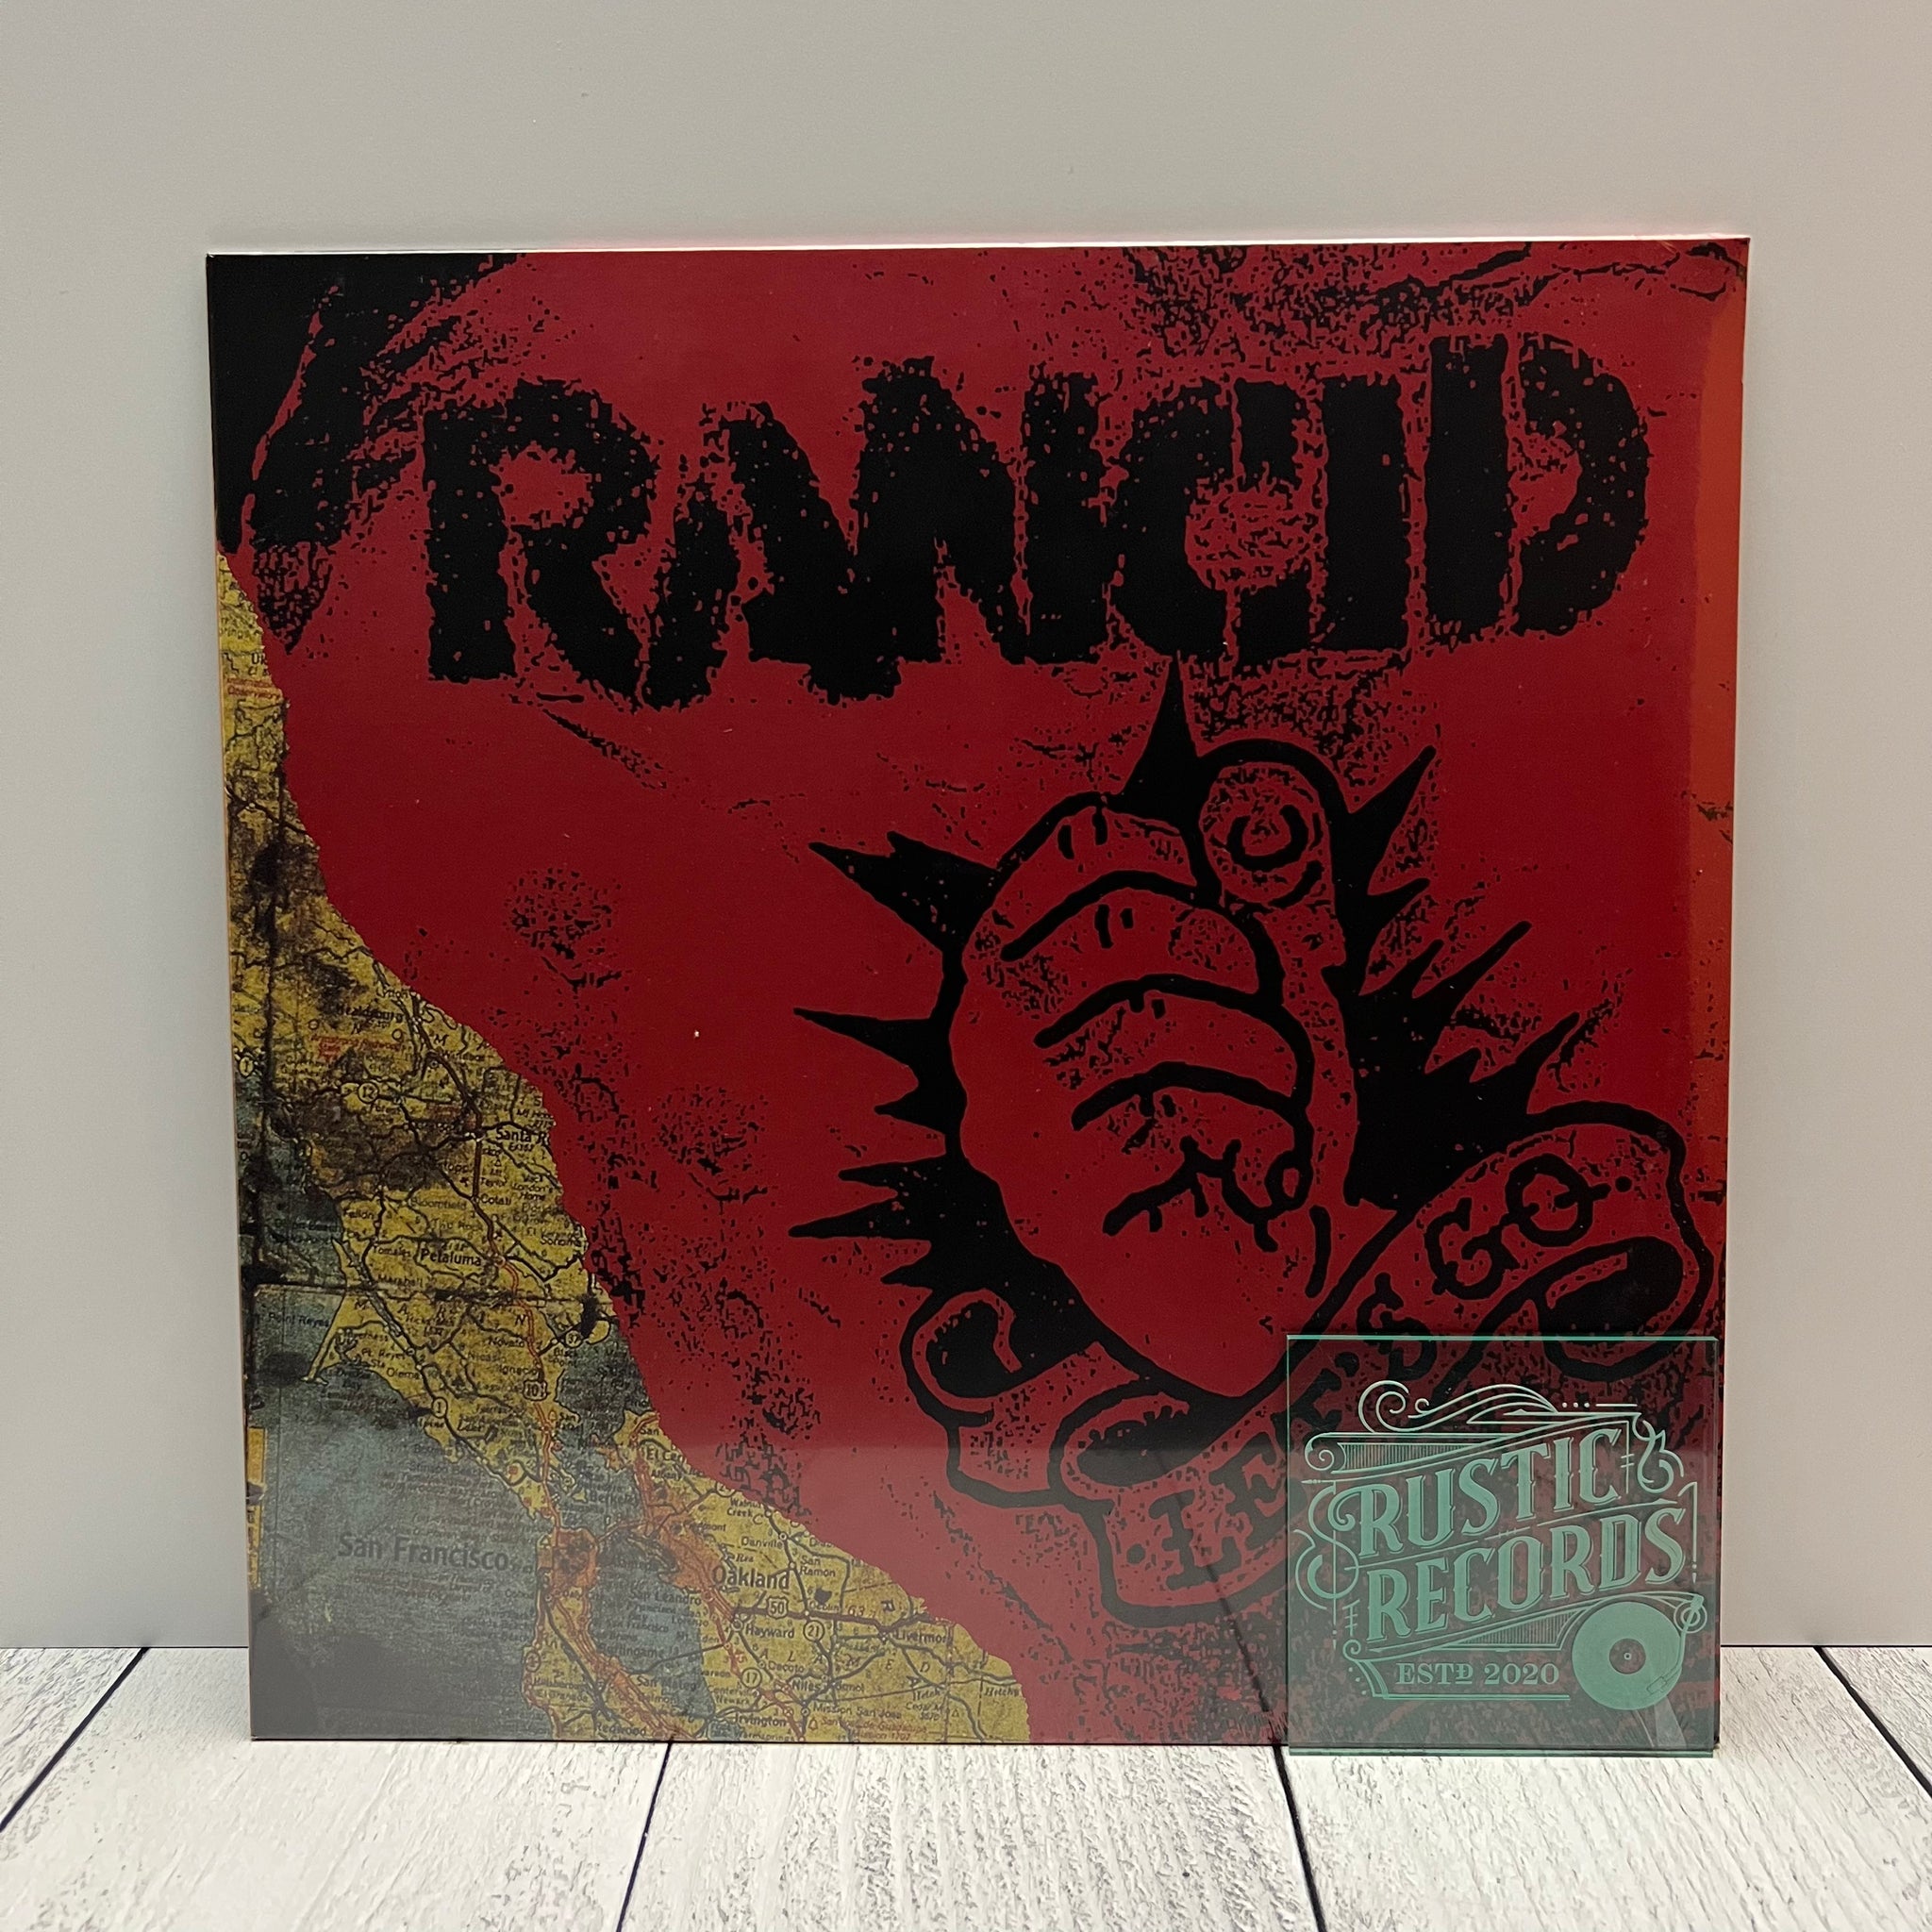 Rancid - Let's Go 20th Anniversary